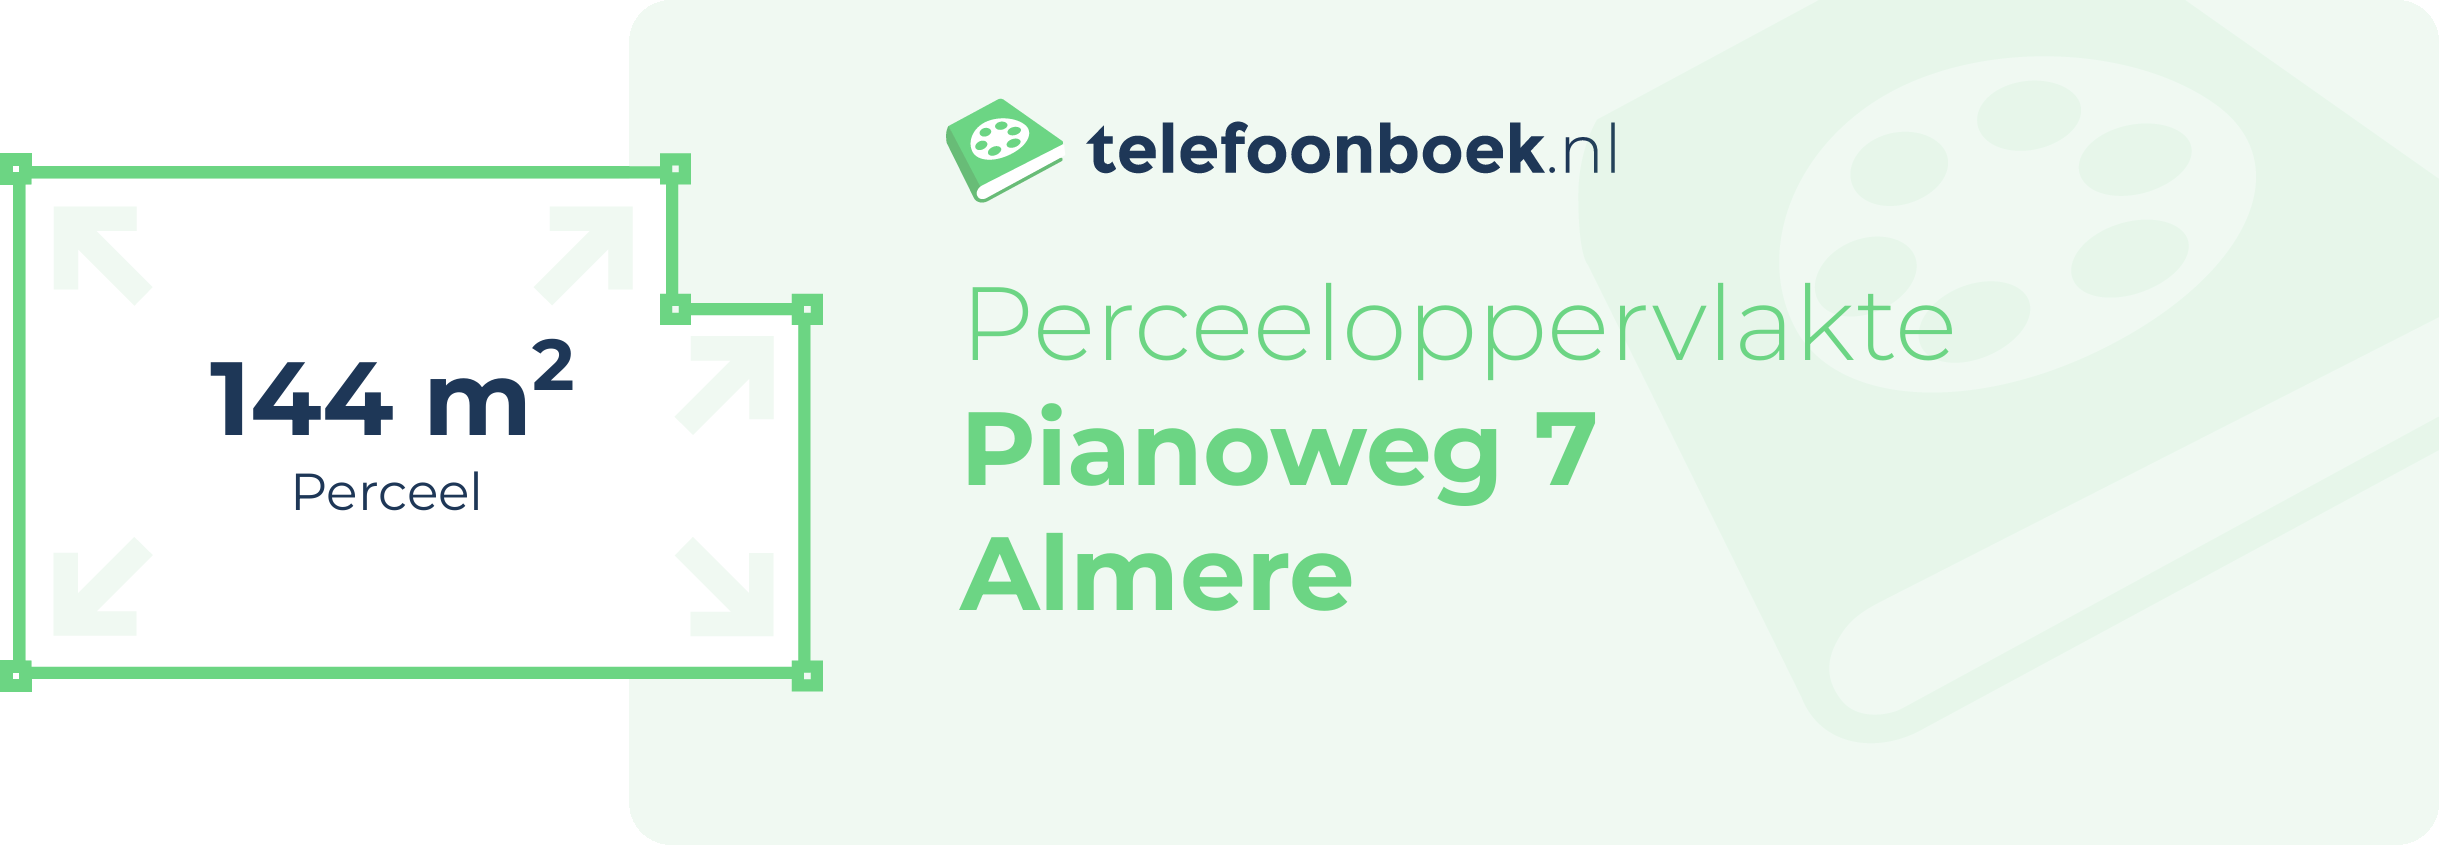 Perceeloppervlakte Pianoweg 7 Almere